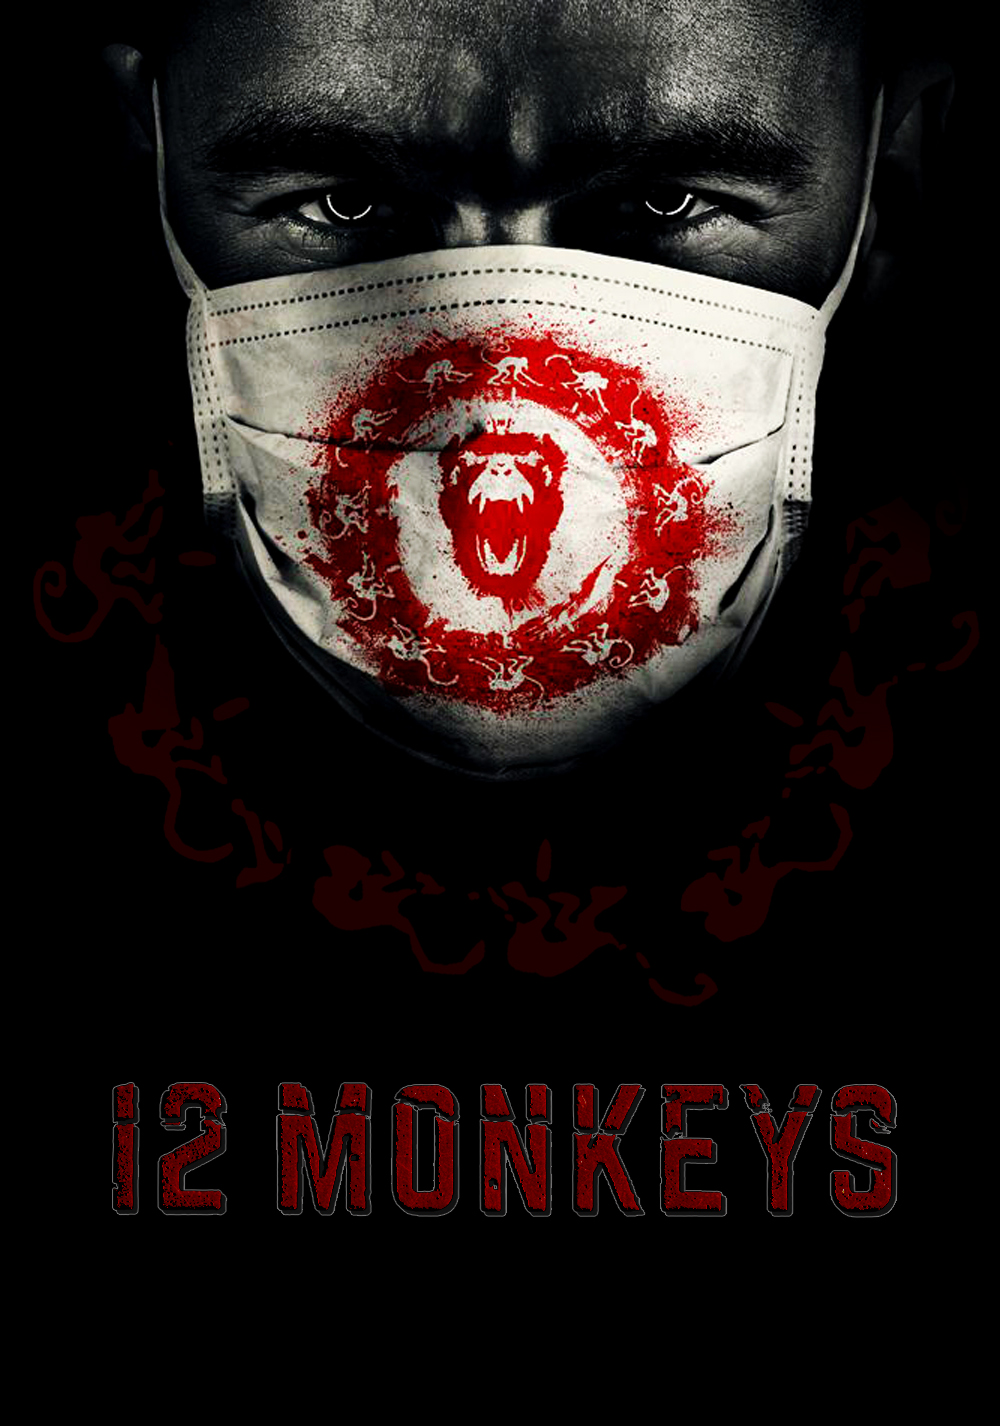 12 Monkeys